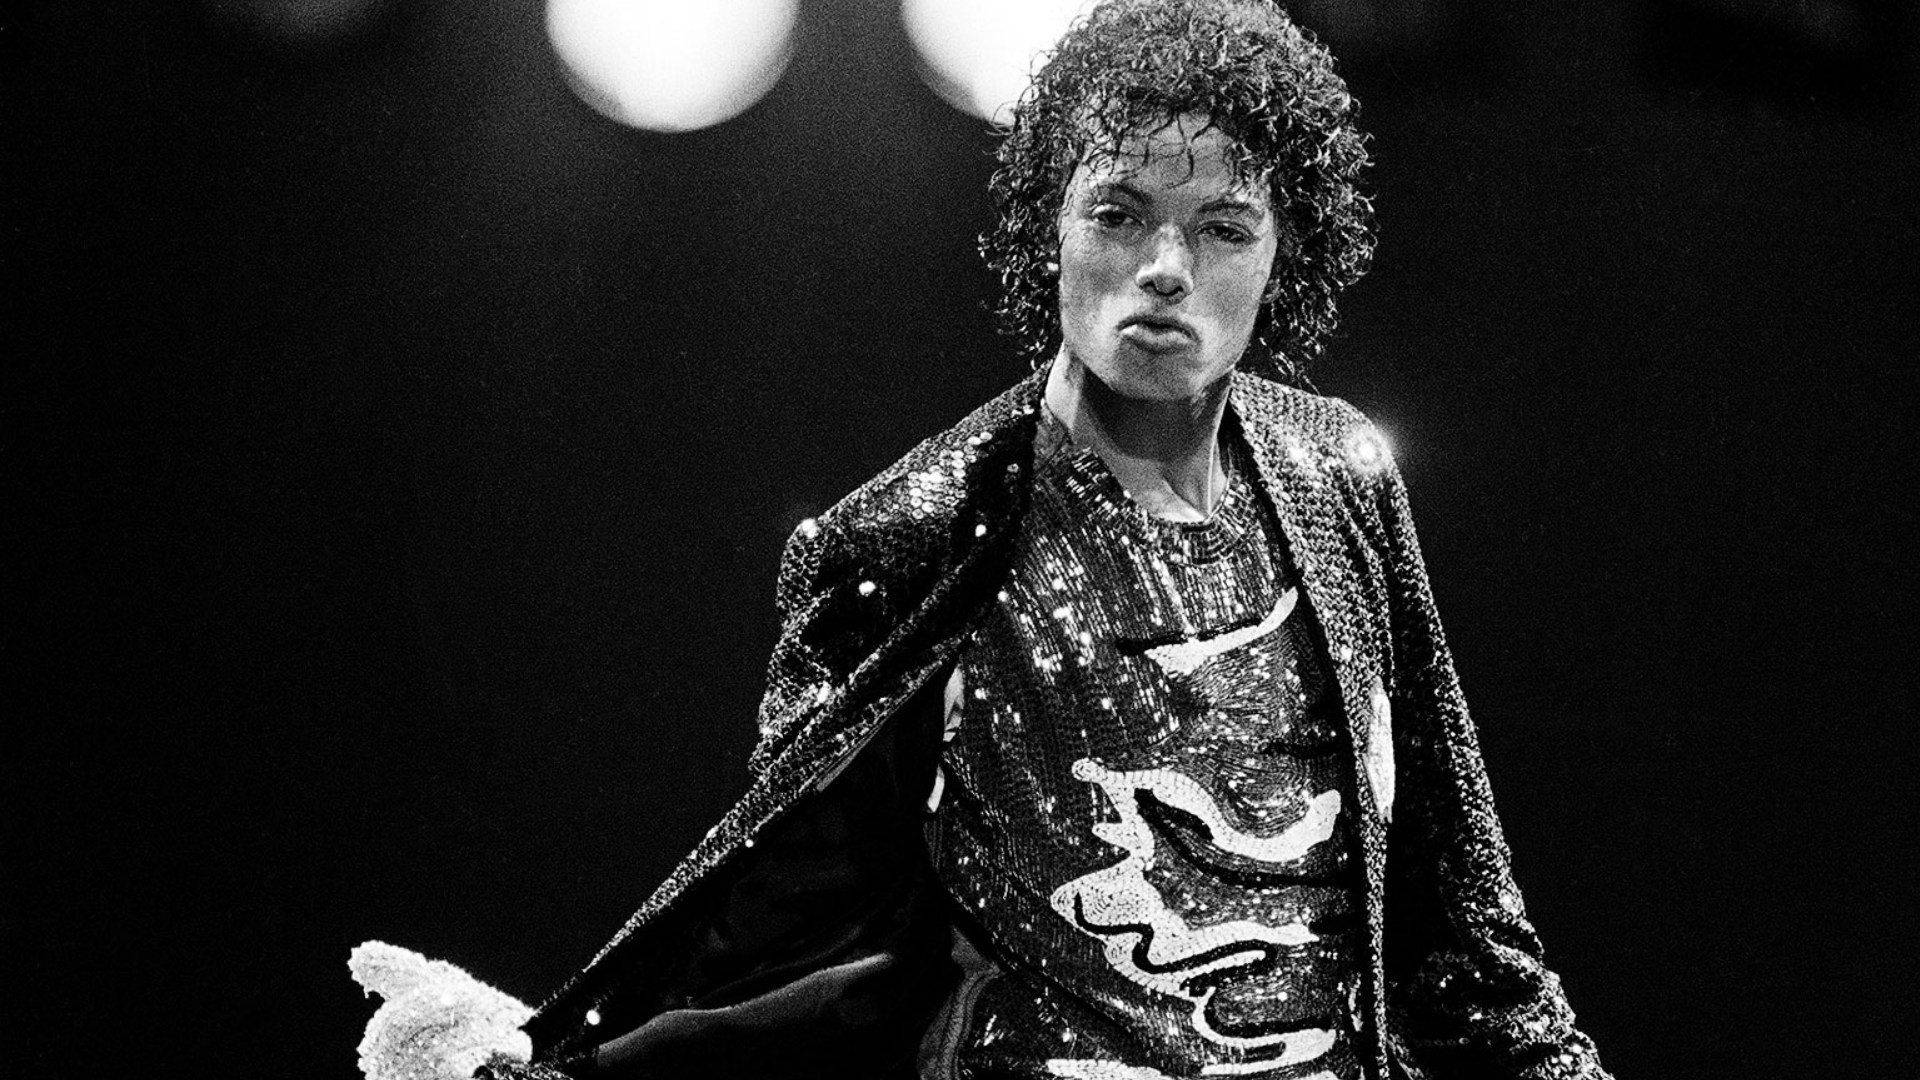 Michael Jackson Wallpaper Images